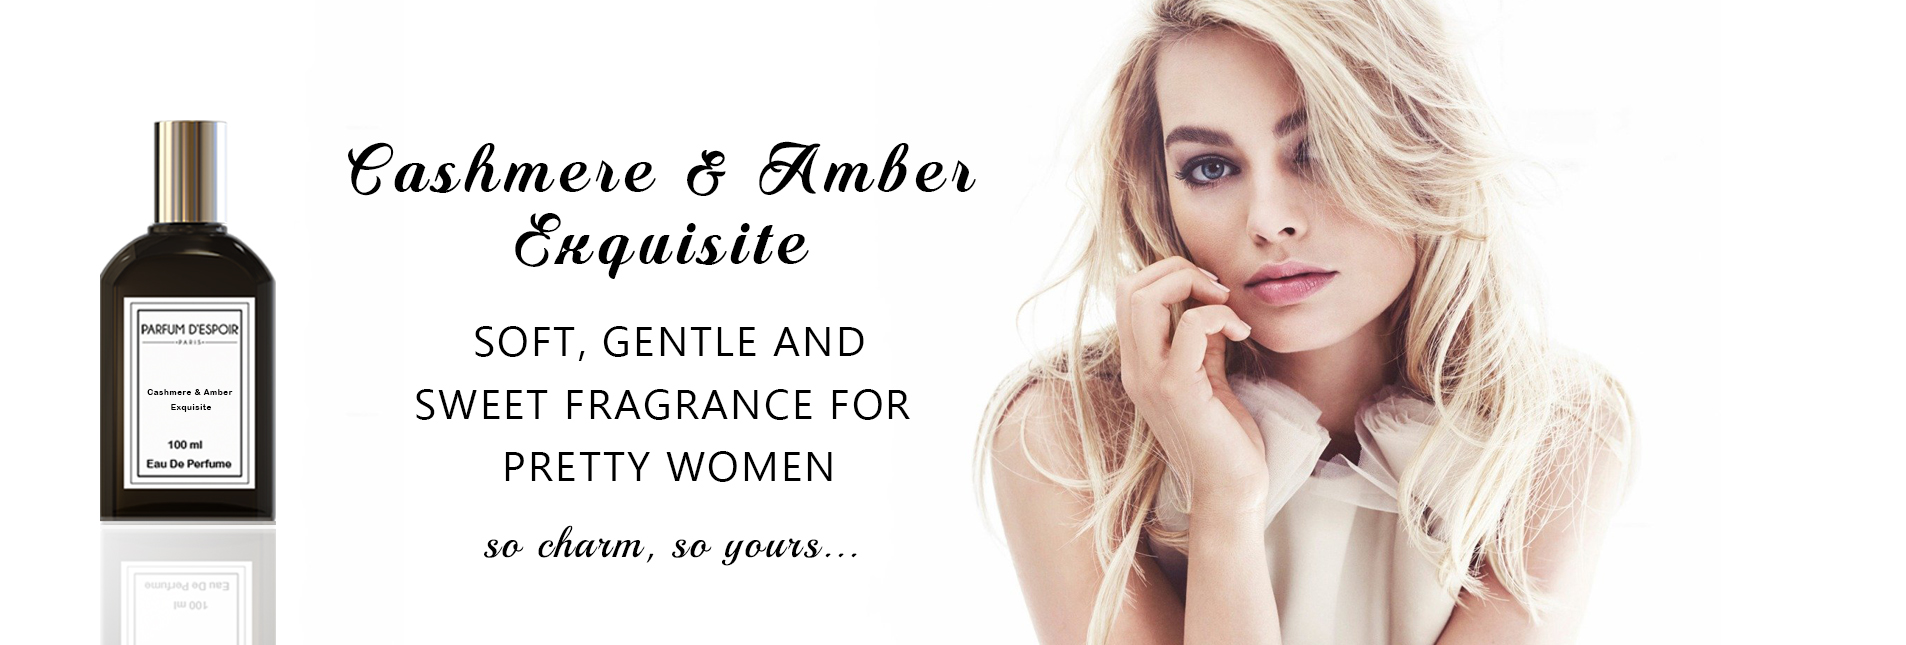 Cashmere & Amber Exquisite - private label perfume - Parfum D'espoir - France